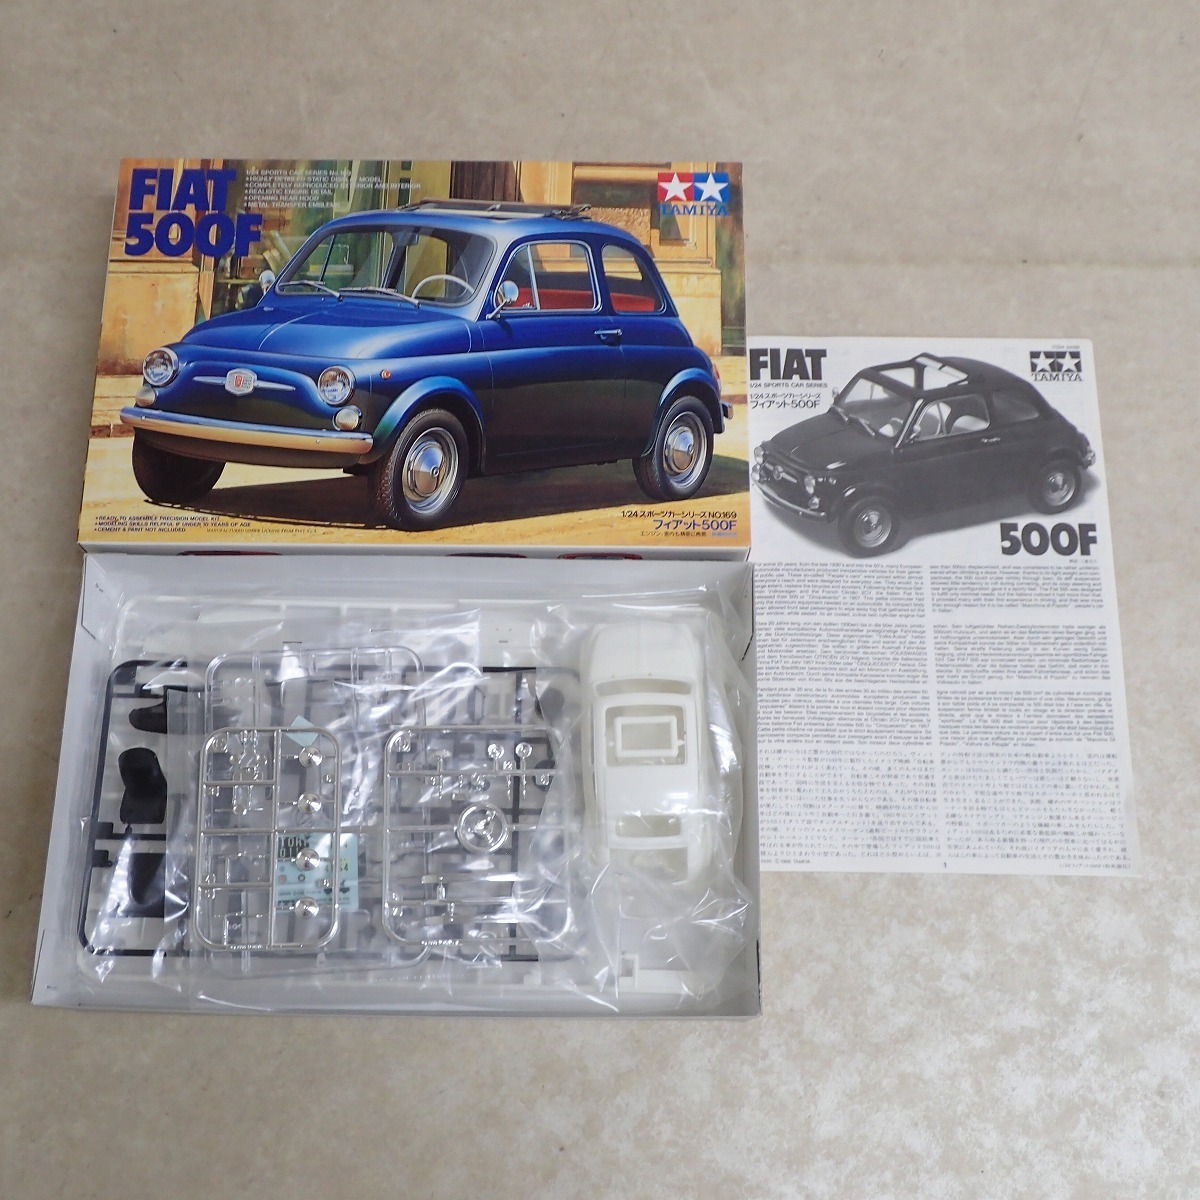  Rare kit model 1/24 Tamiya Fiat 500F from Japan 1373 画像2